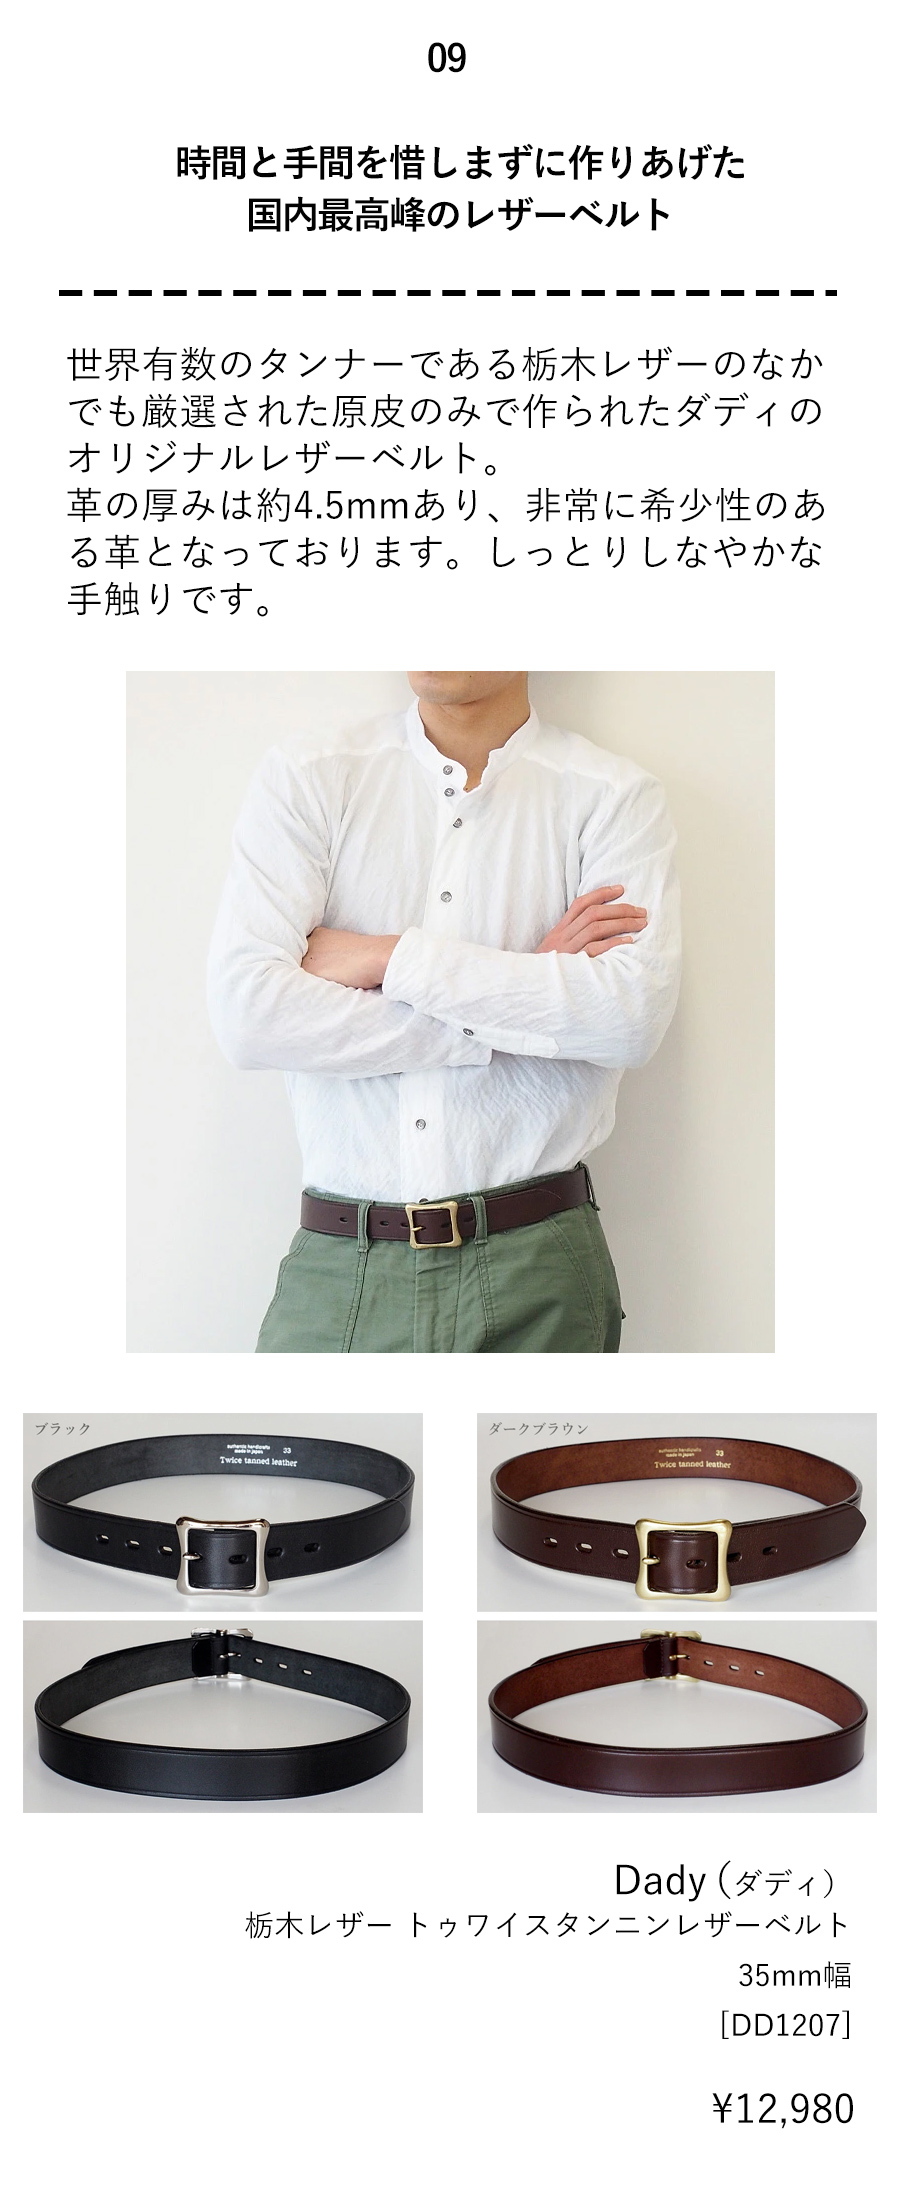 Dady<!--nl-->Tochigi Leather Twistannin Leather Belt